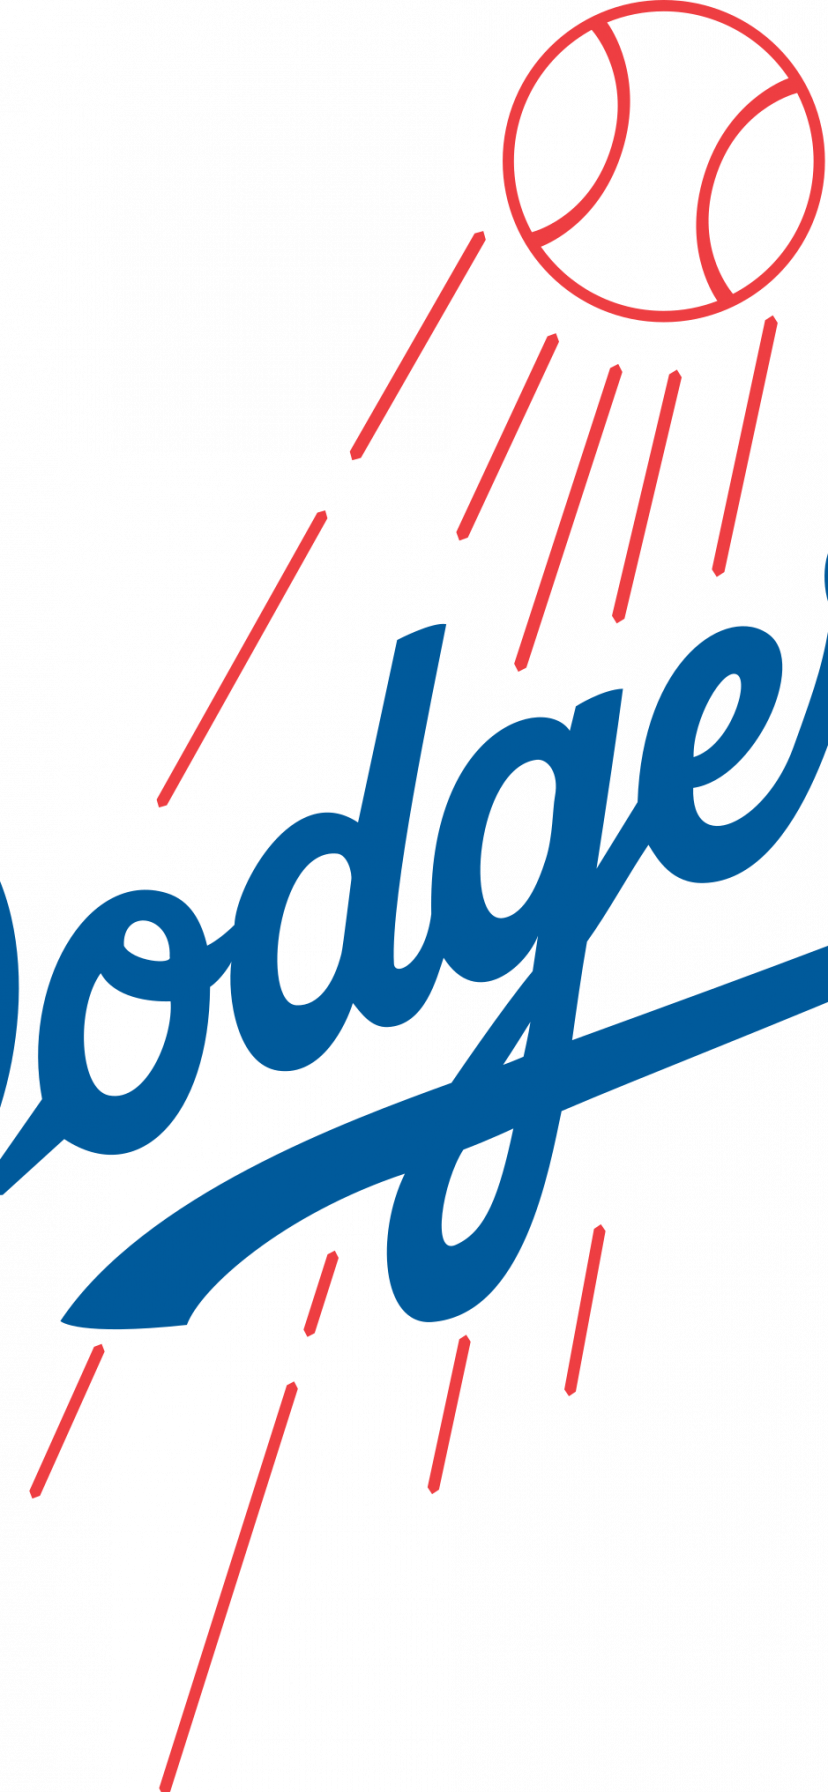 61 La Dodgers iPhone